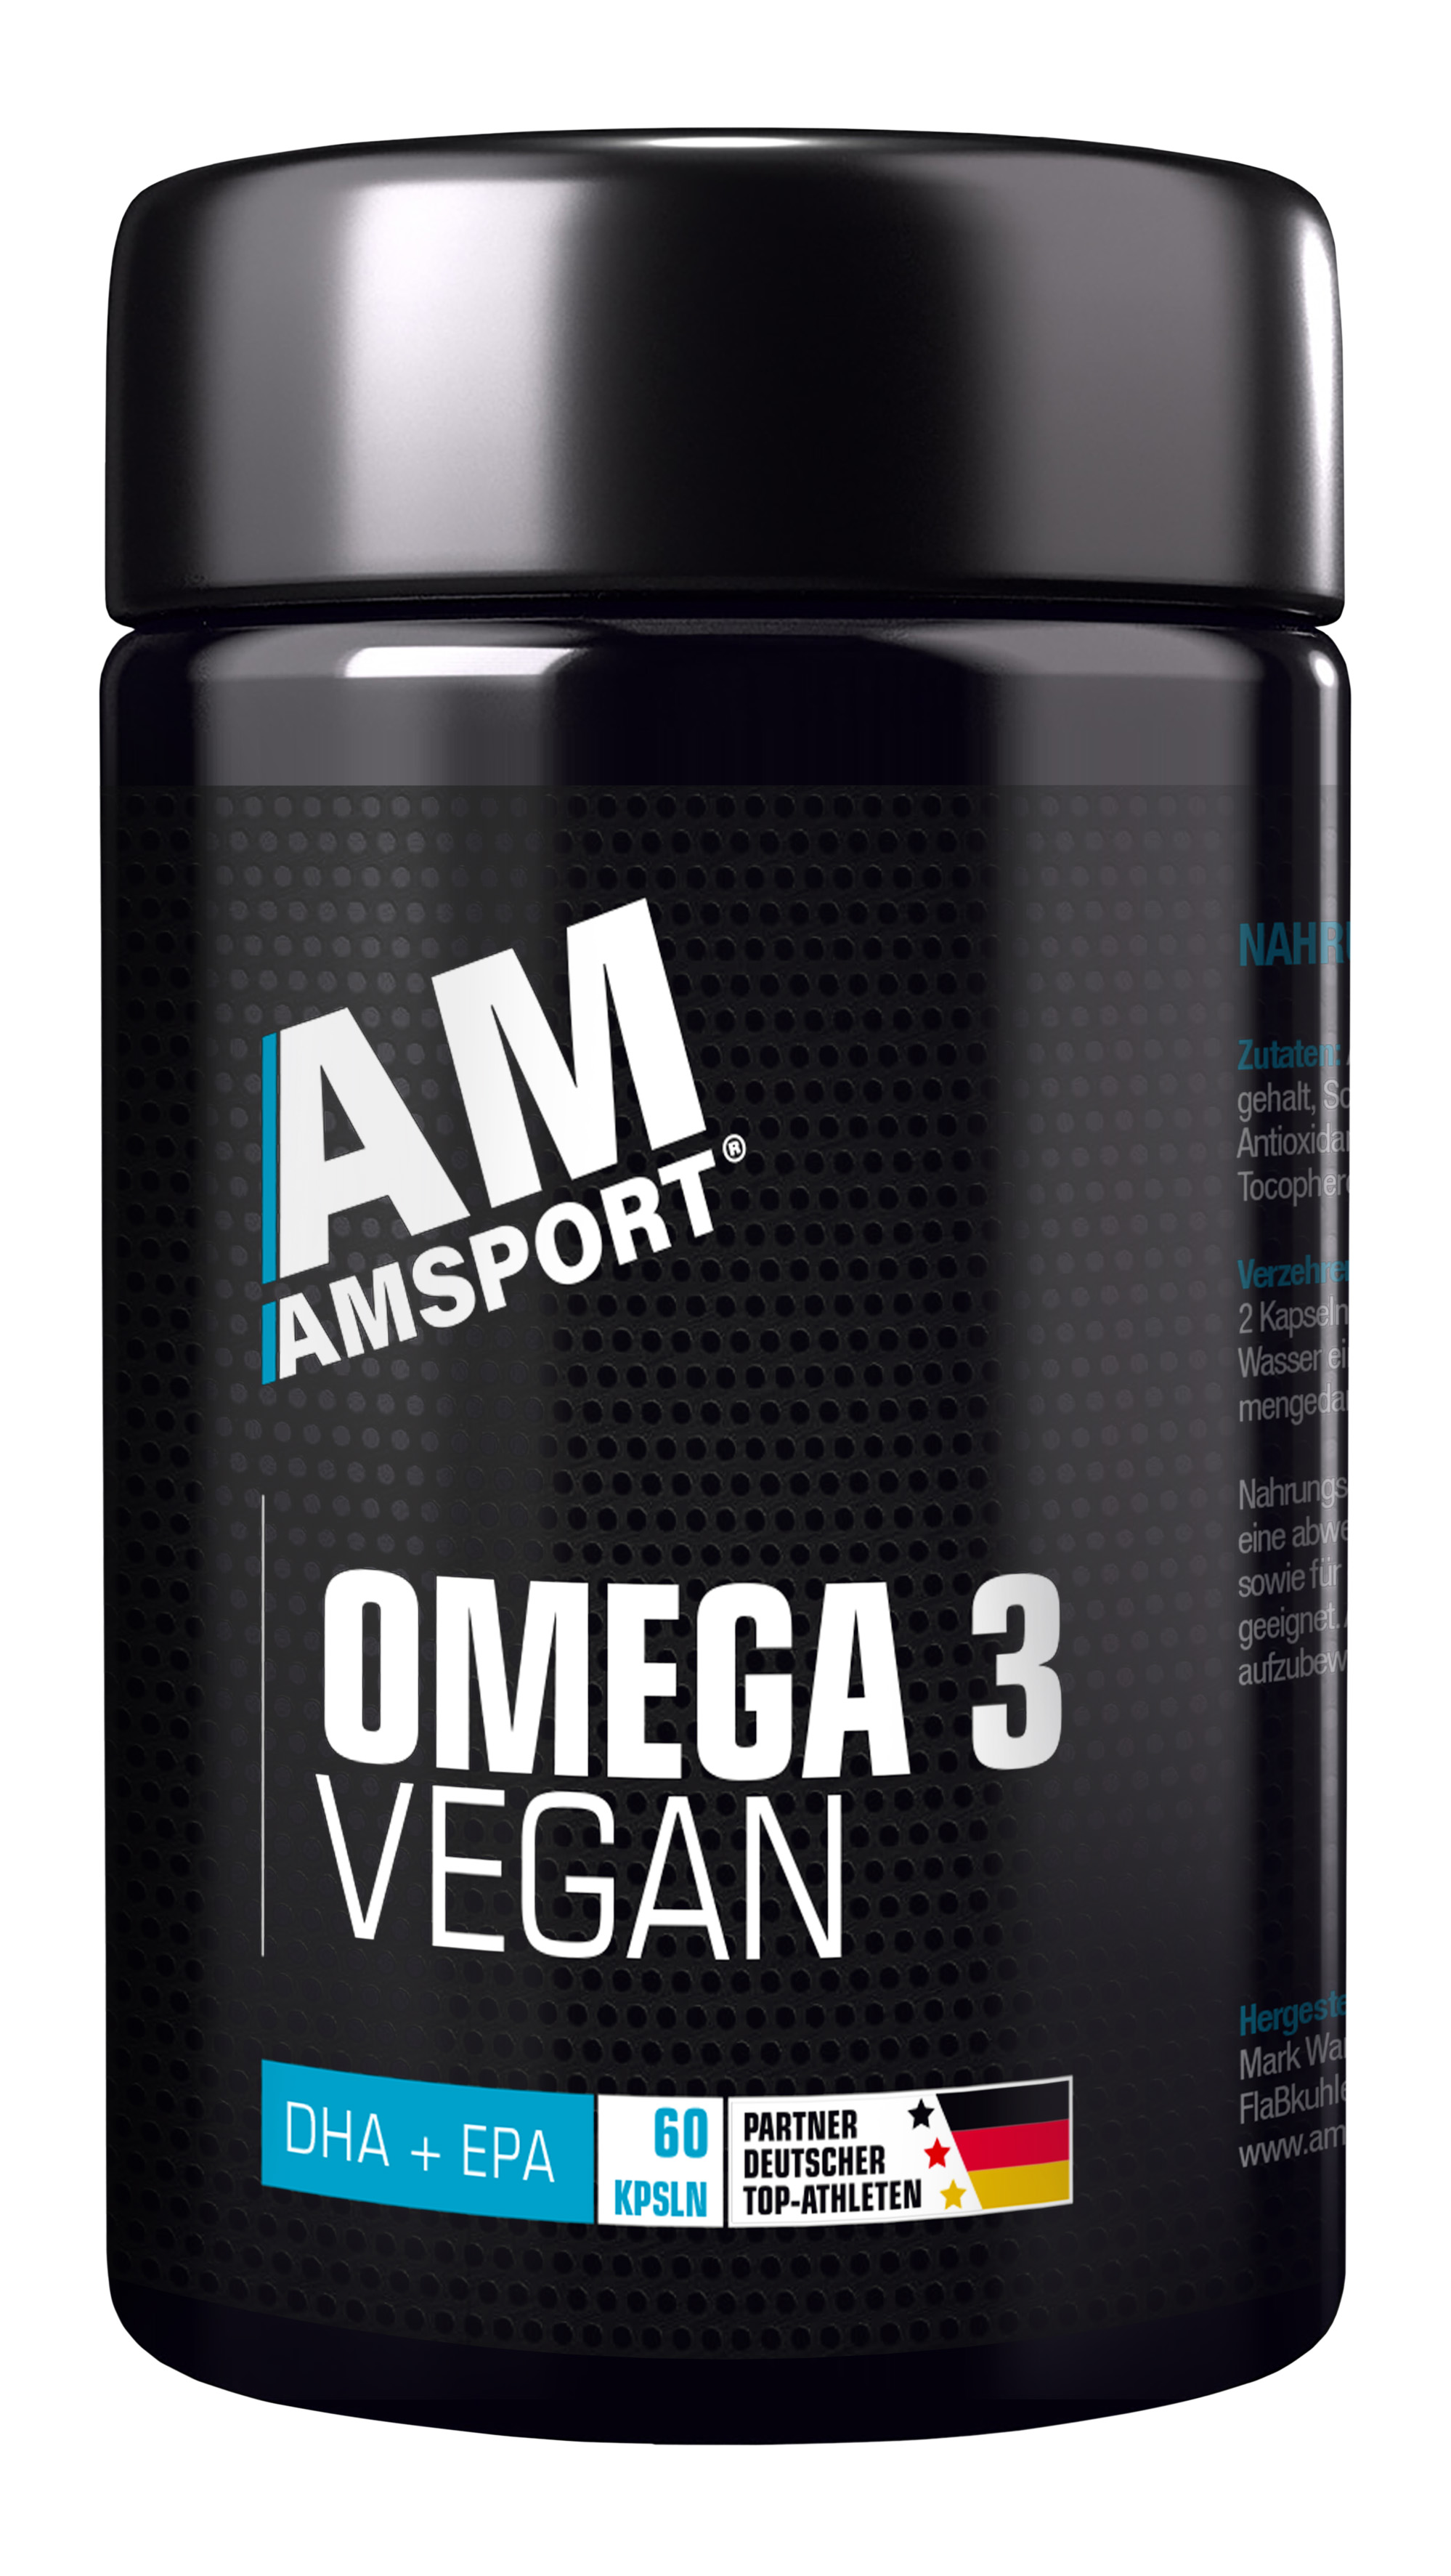 AMSPORT Omega 3 vegan 60 Kapseln